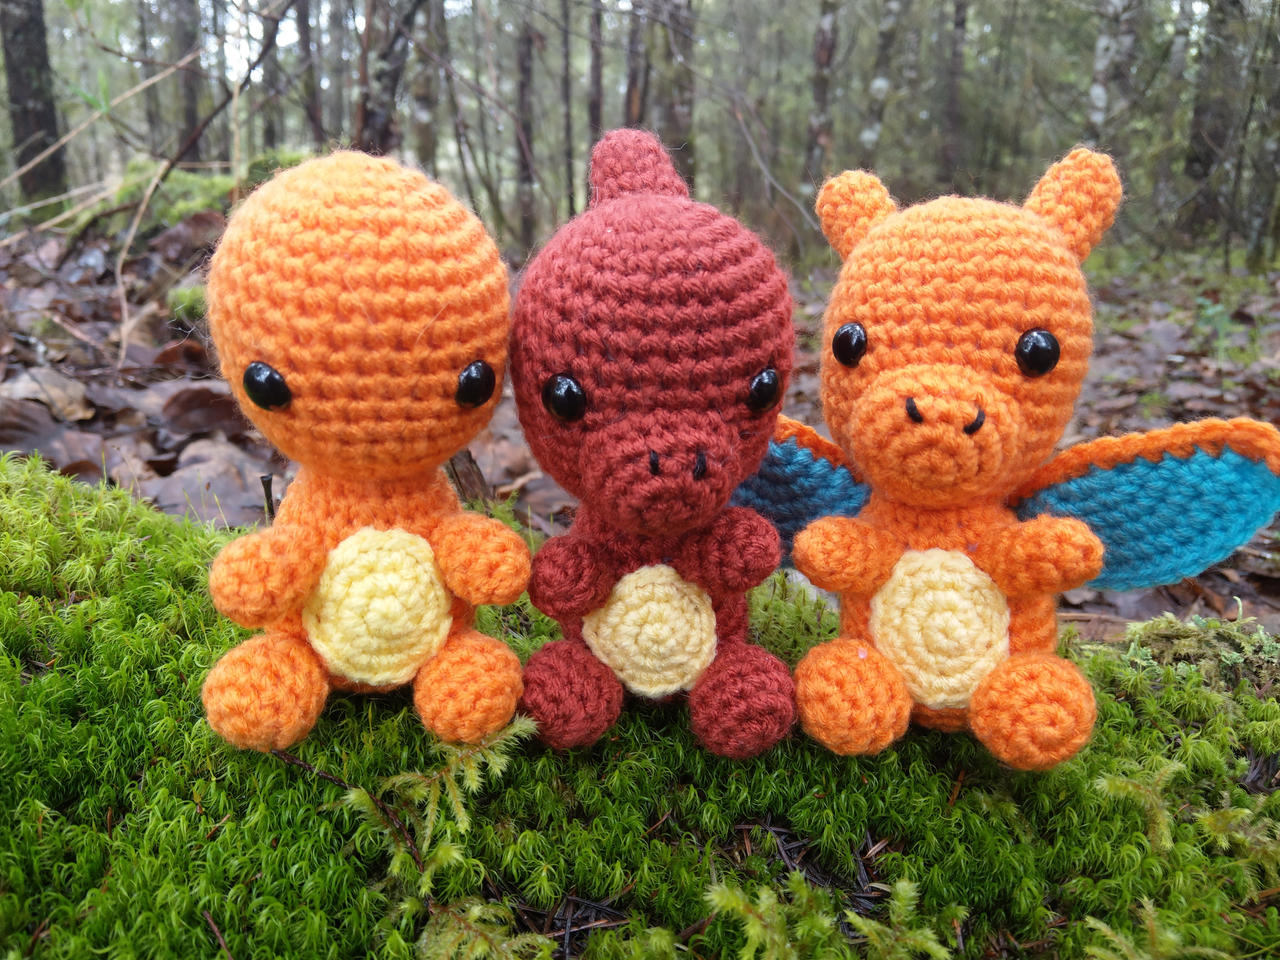 27 Pokemon Crochet Patterns